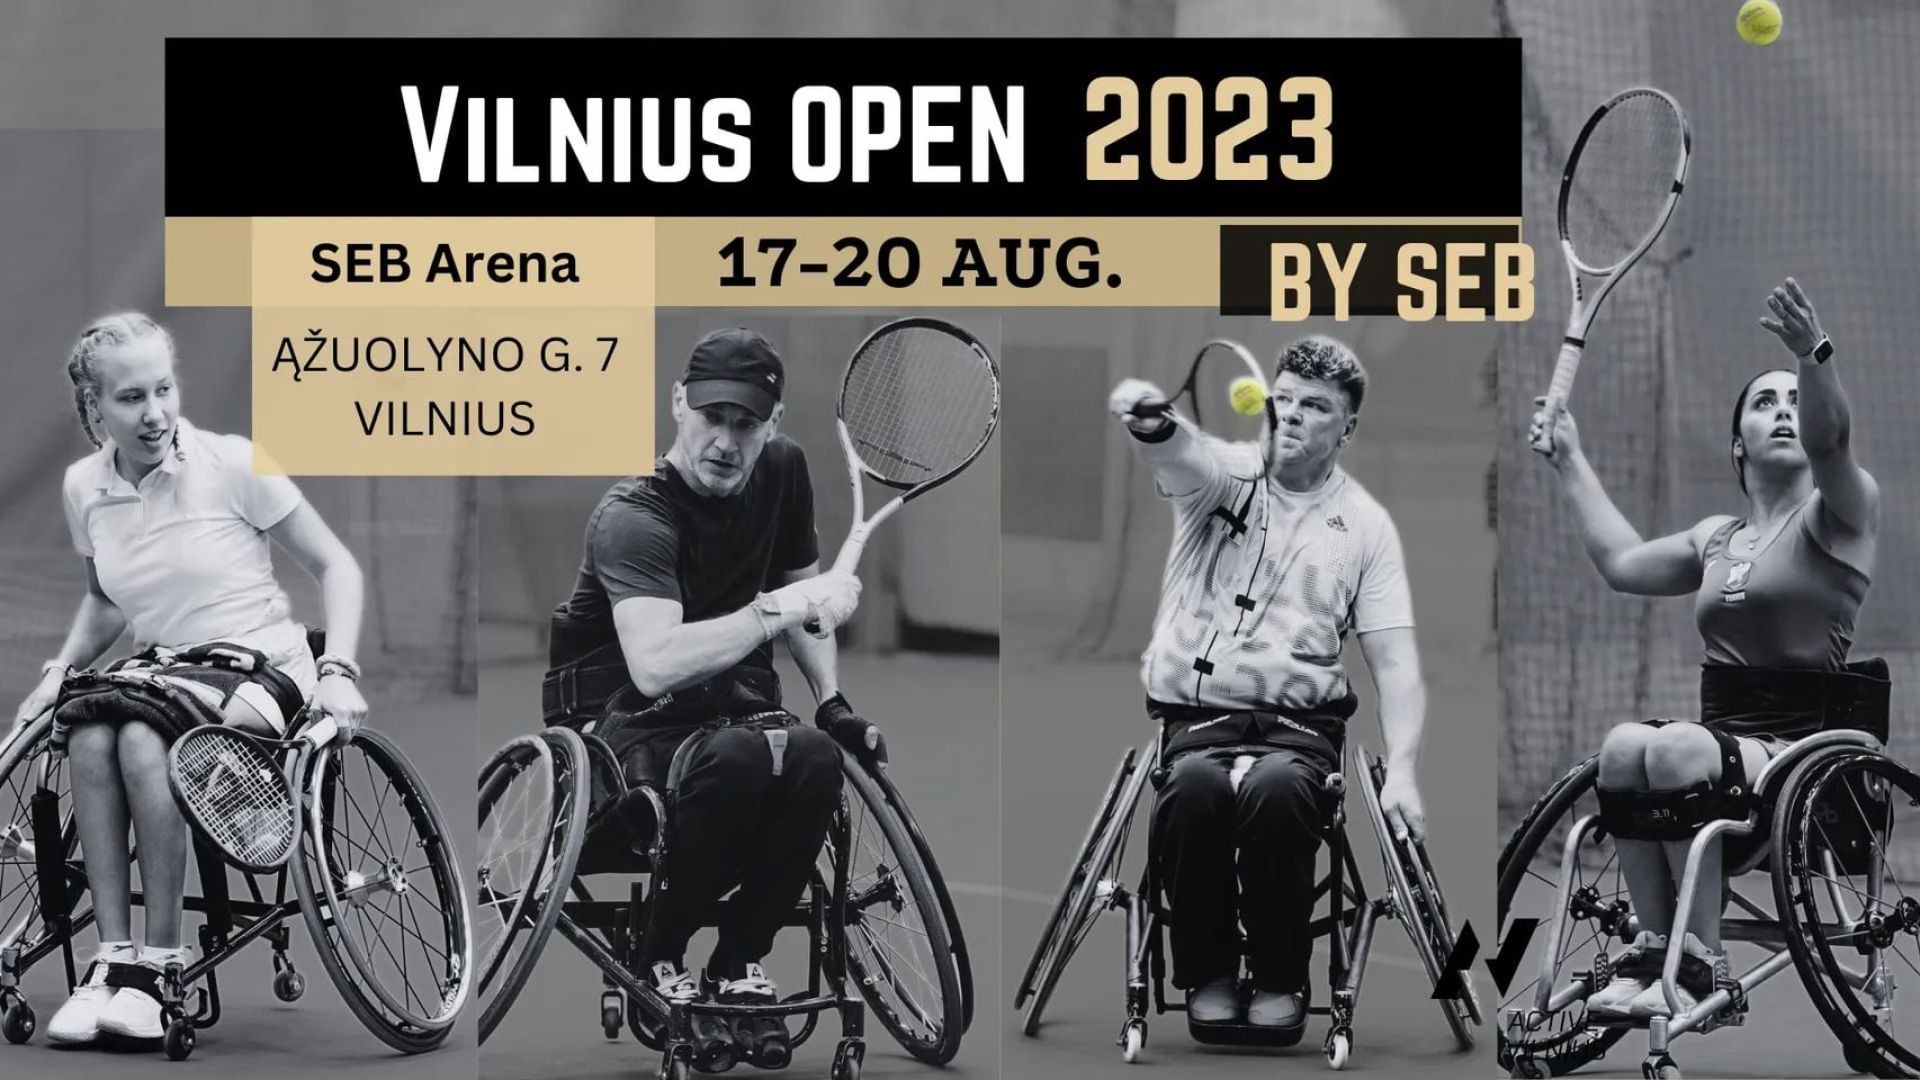 COURT 6 DAY 3 - VILNIIUS OPEN 2023 BY SEB